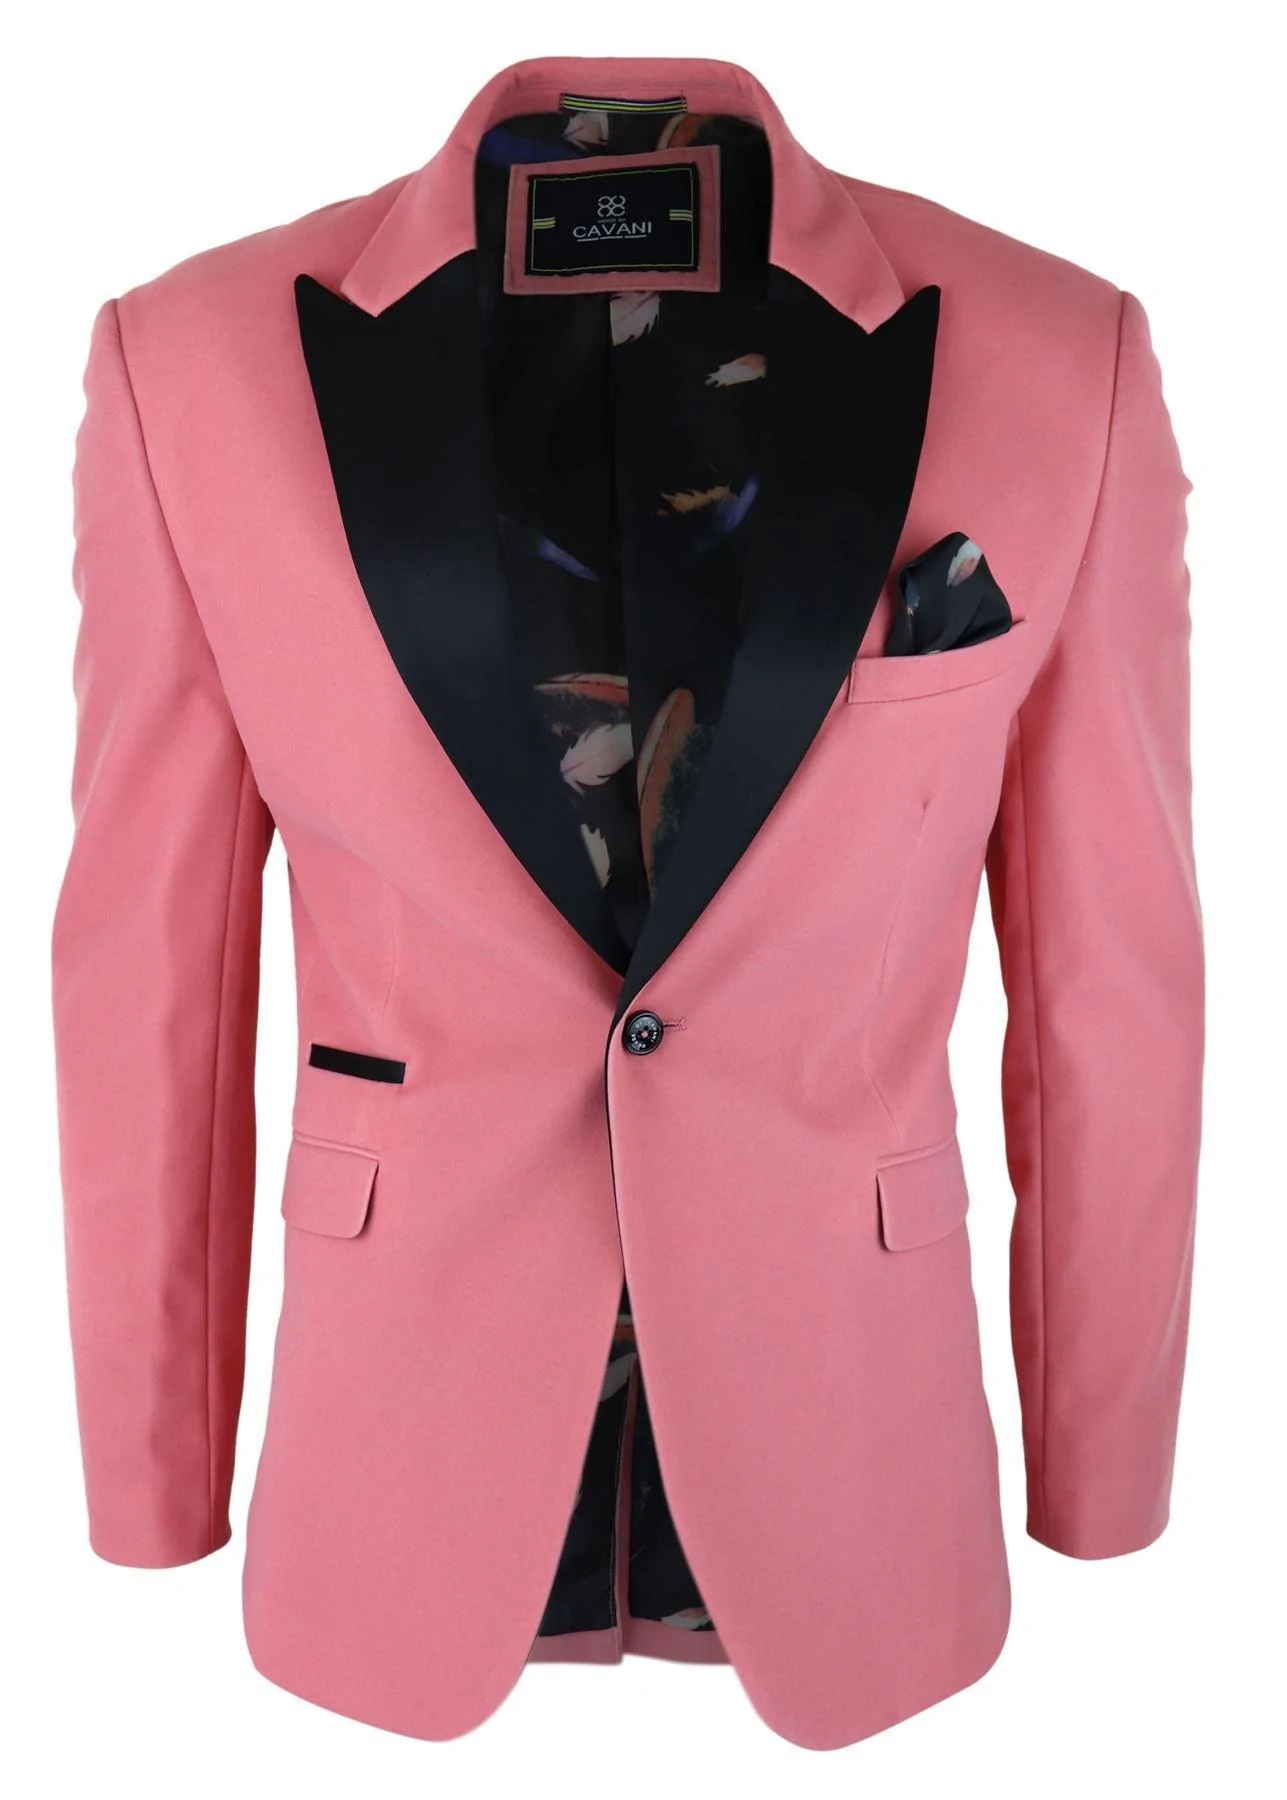 black and pink suit men